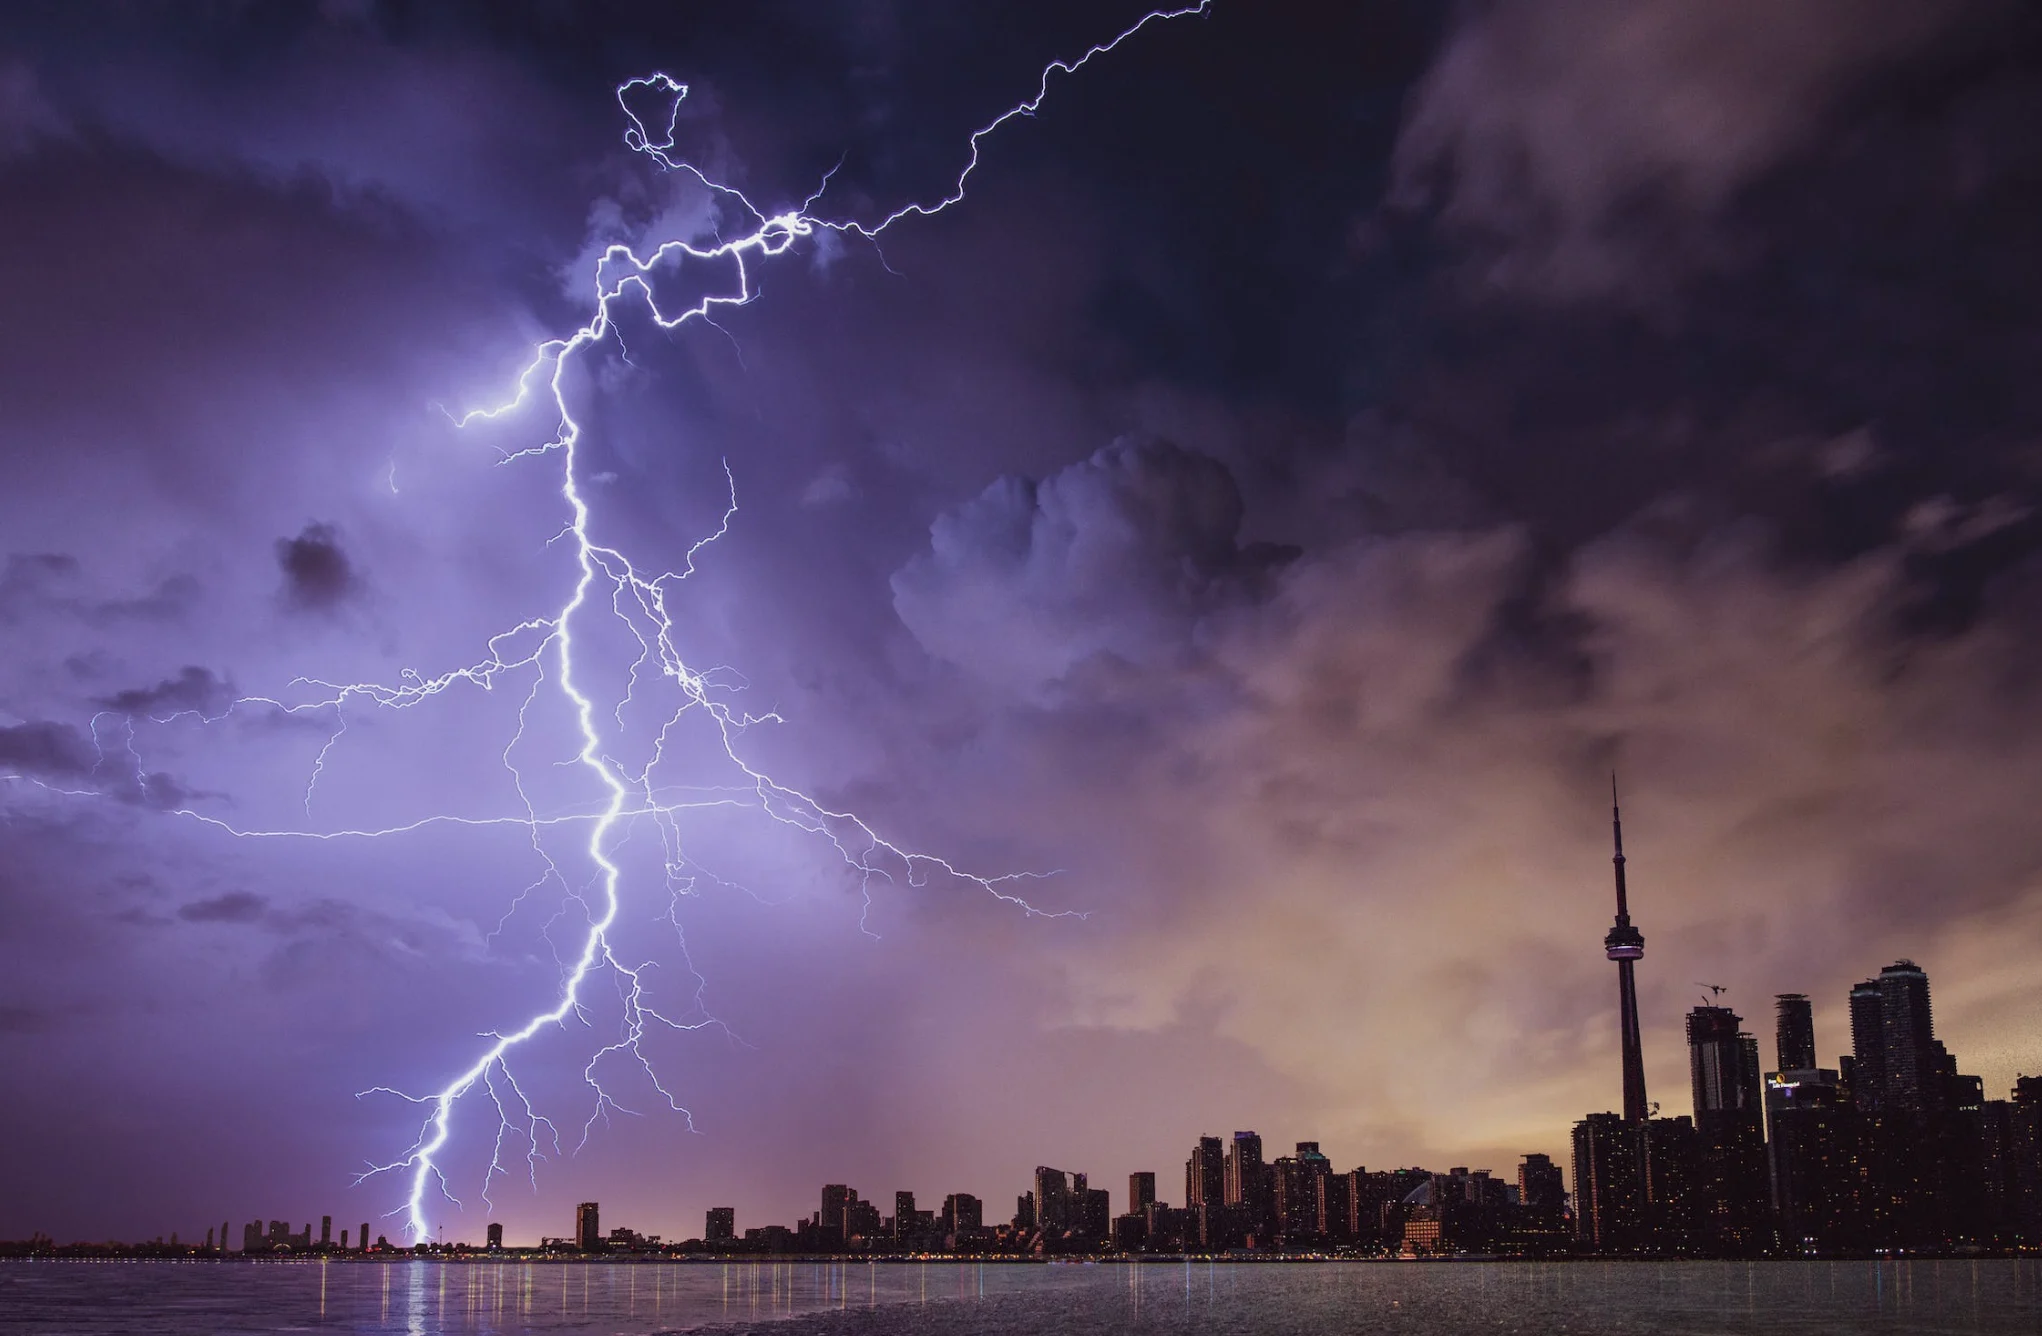 PEXELS/Andre Furtado: Lightning, Toronto, Ontario, thunderstorm, summer, spring, storm, thunder. Link: https://www.pexels.com/photo/lightning-and-gray-clouds-1162251/